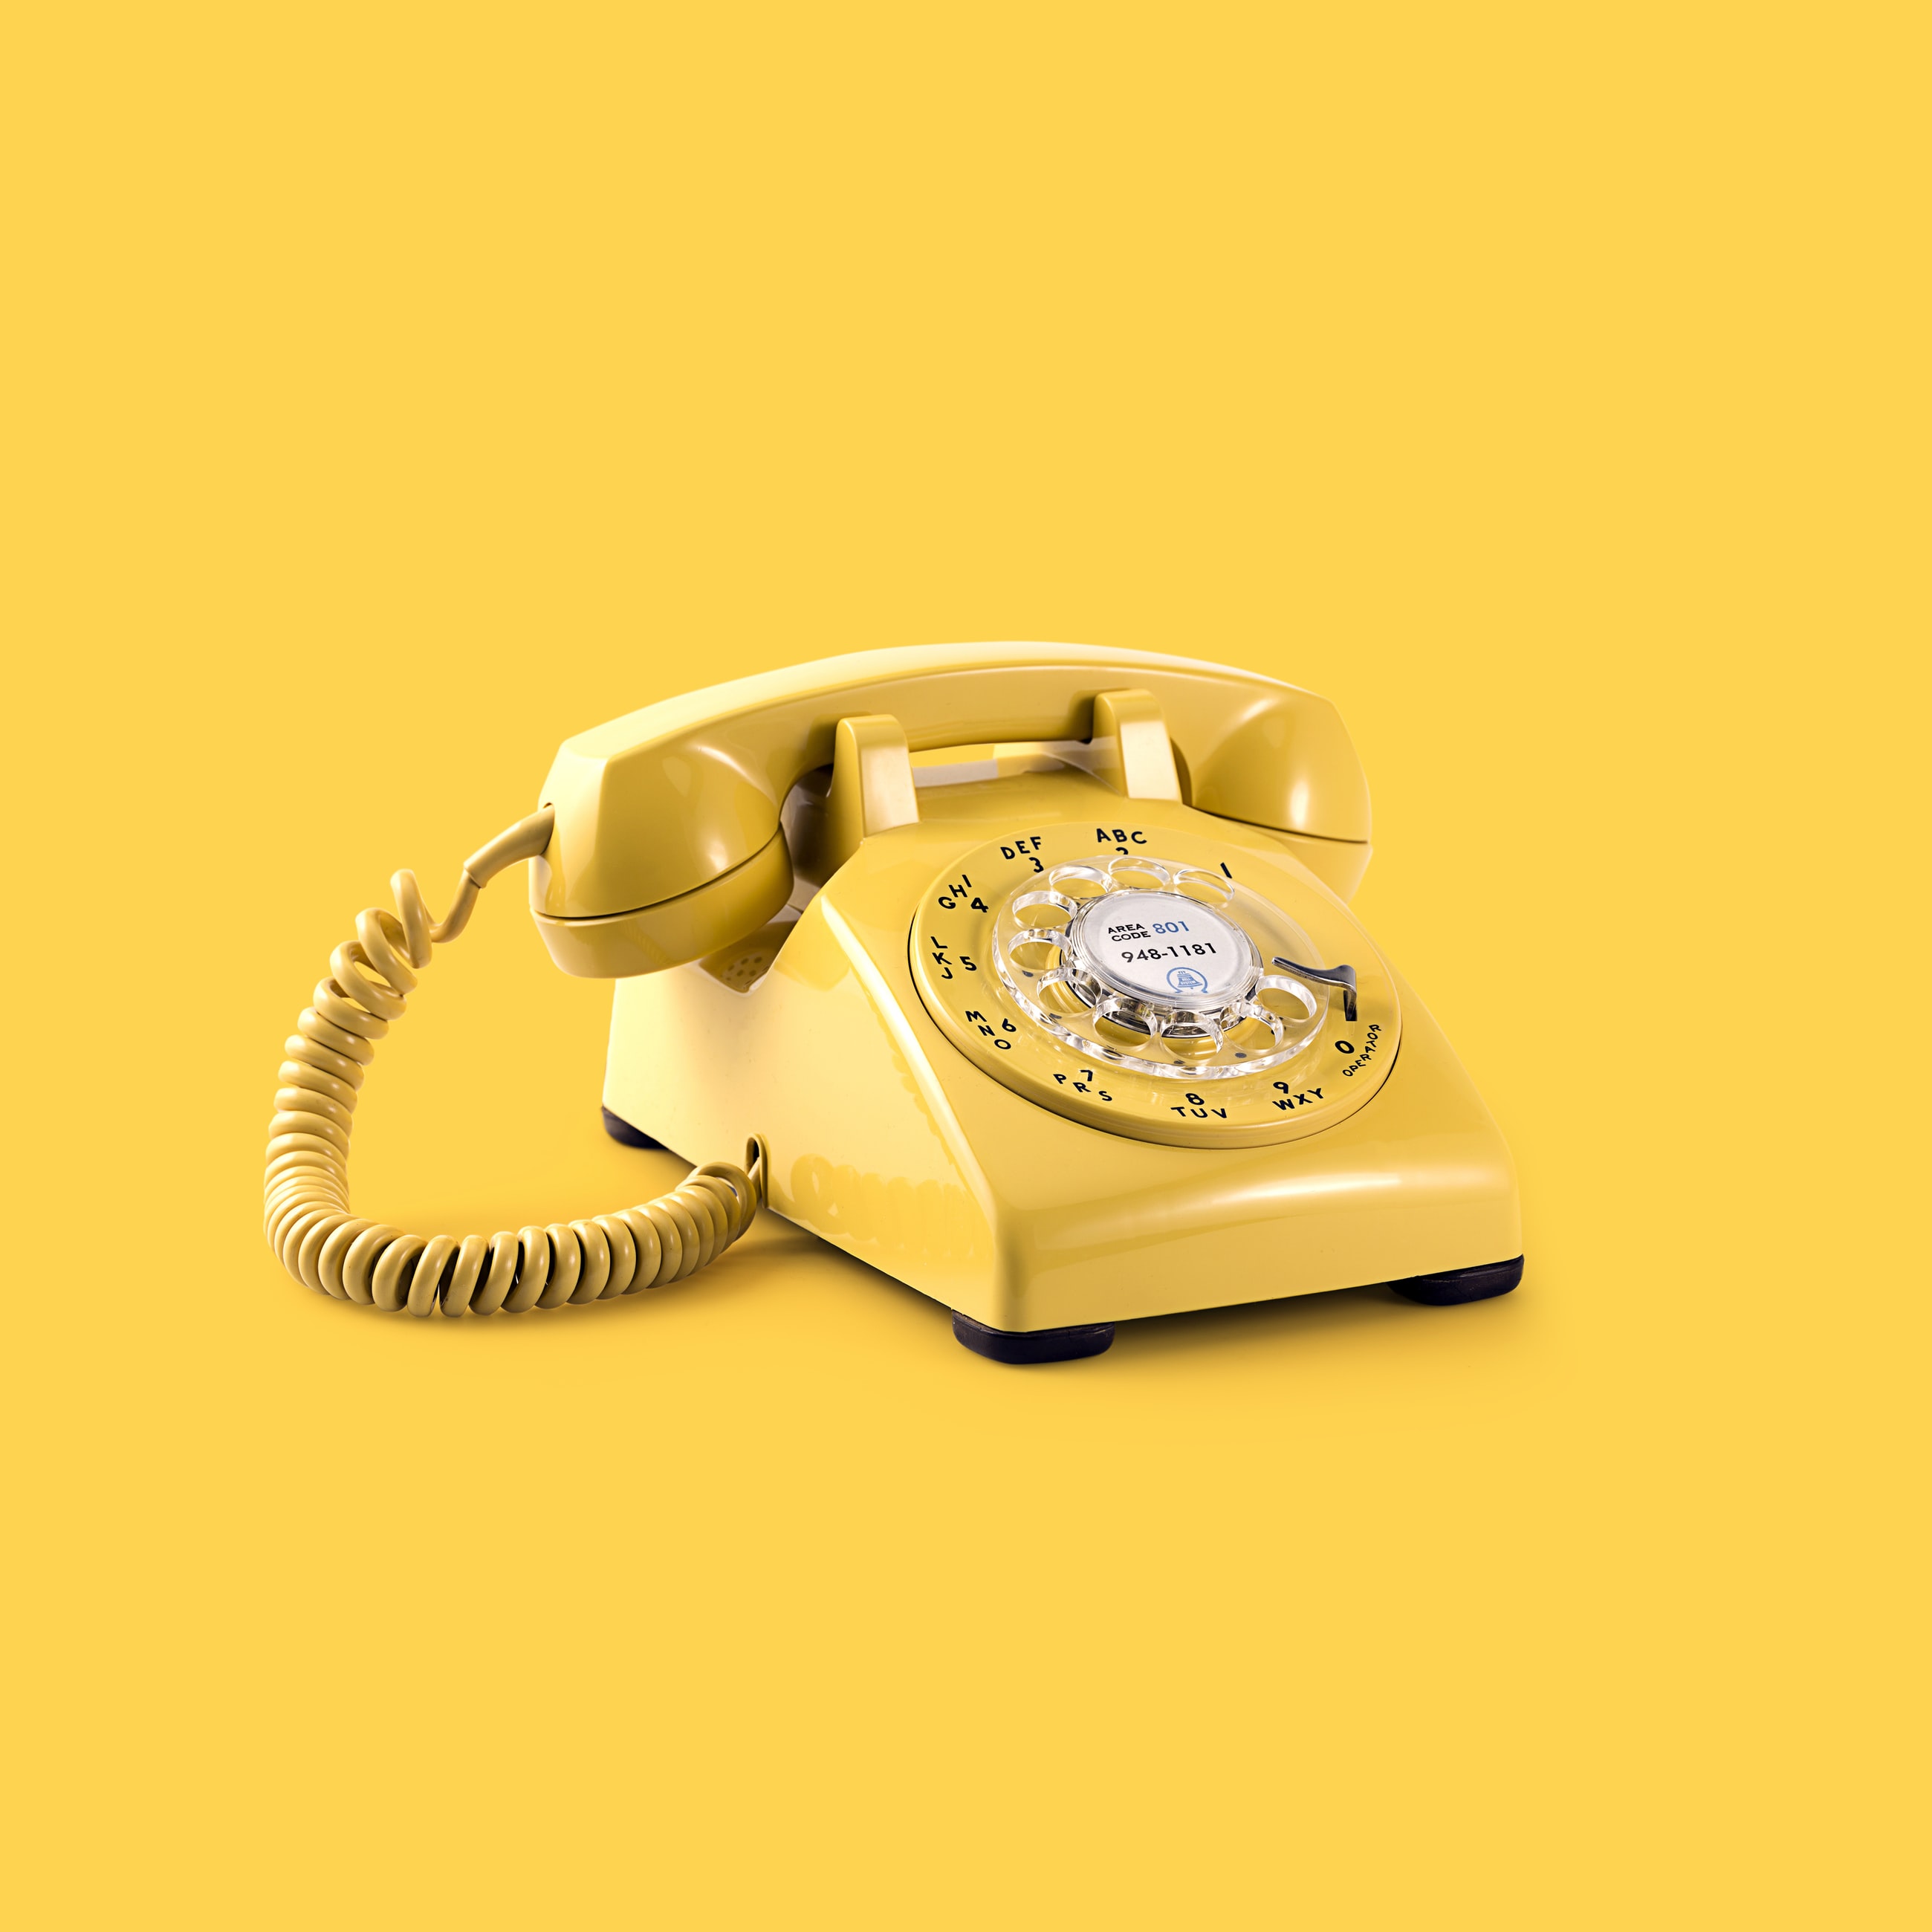 Old phone ringtones